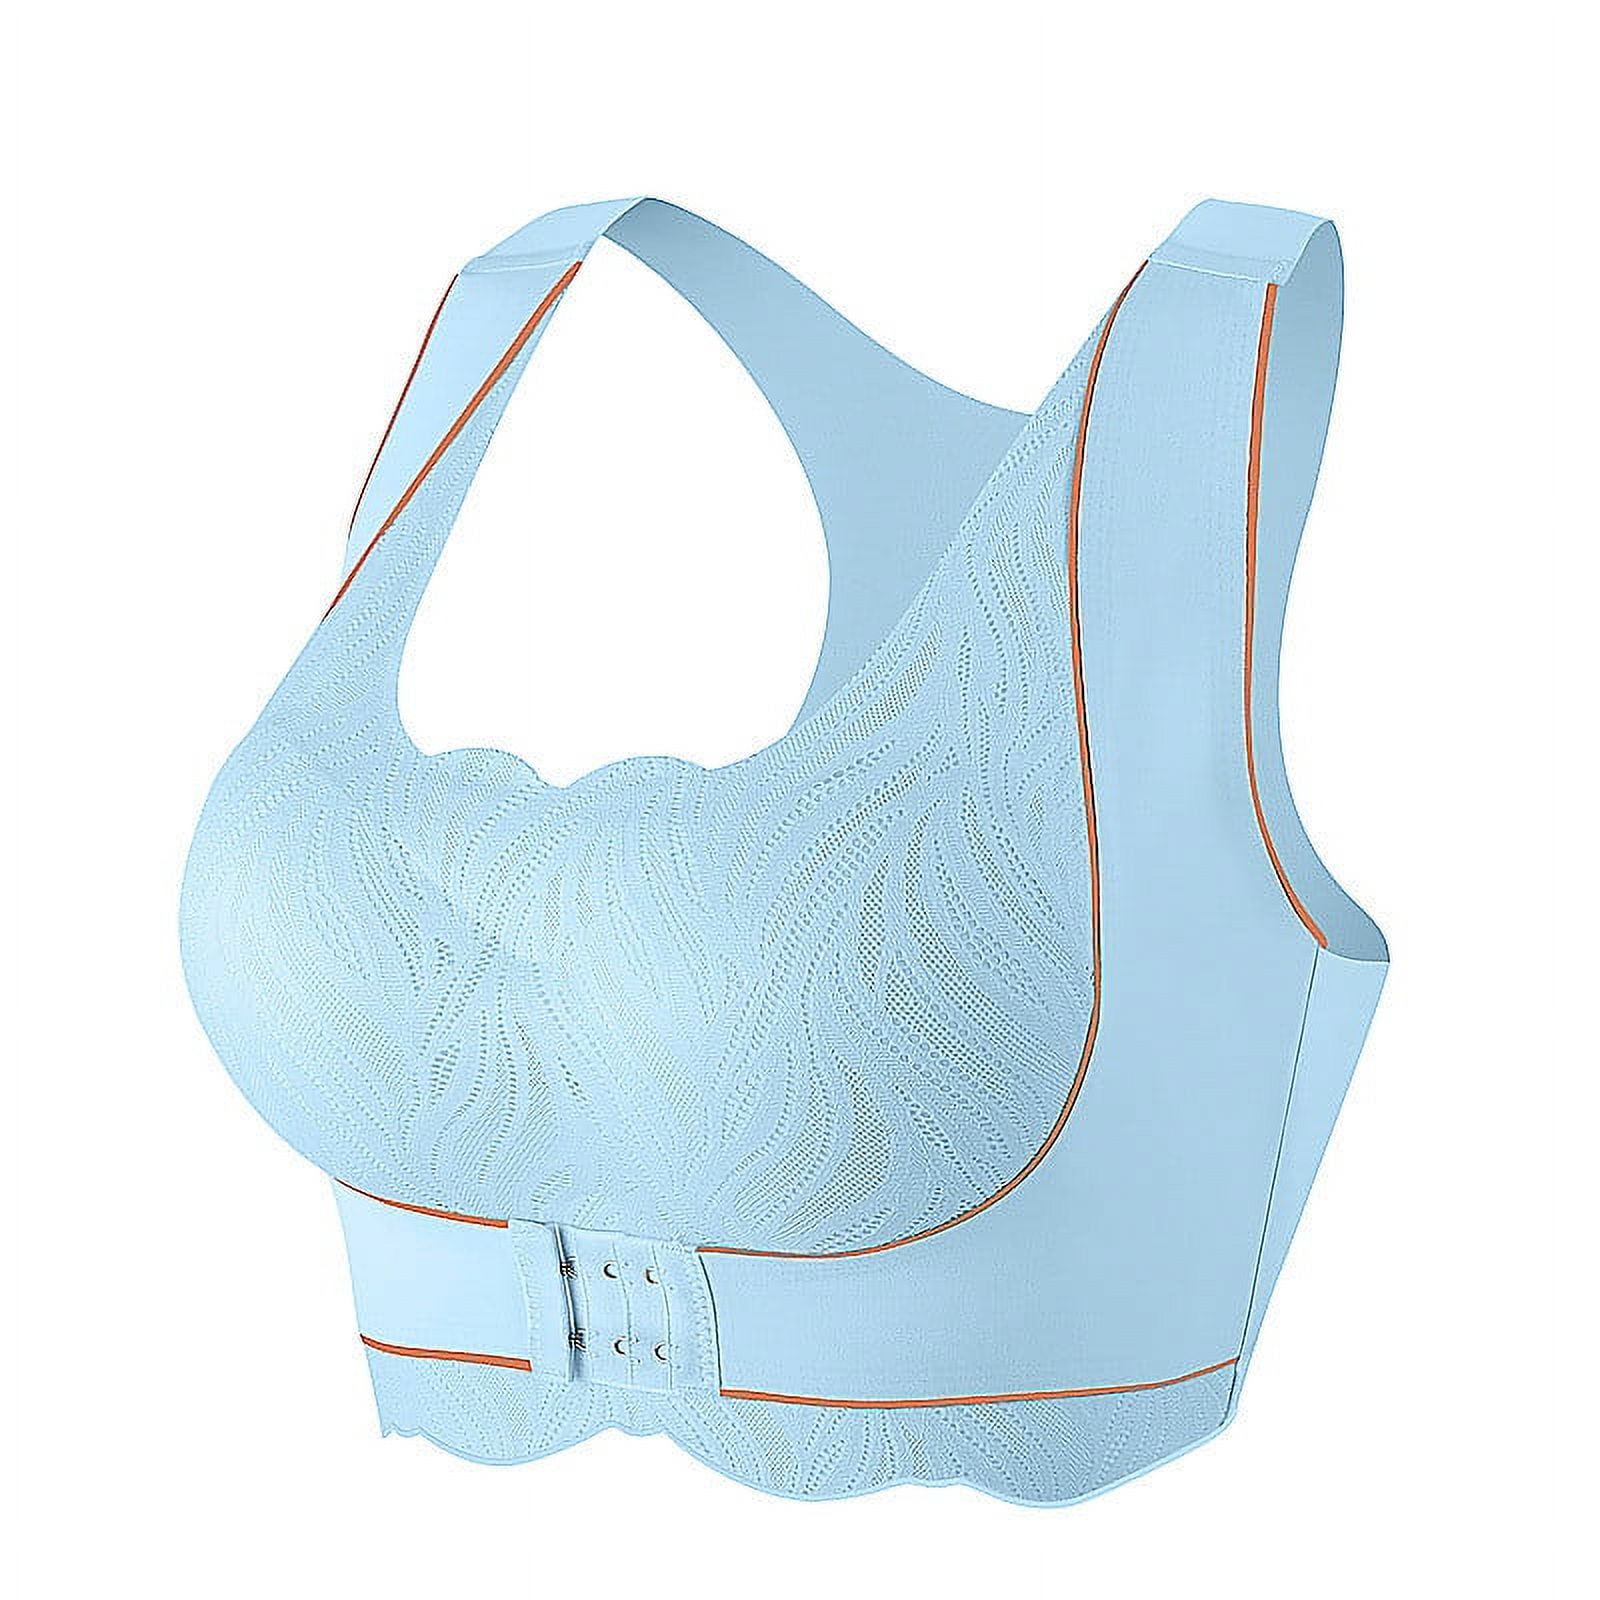 2015 New sutian push up bra a bras 38 dd comfort bra Plus Size